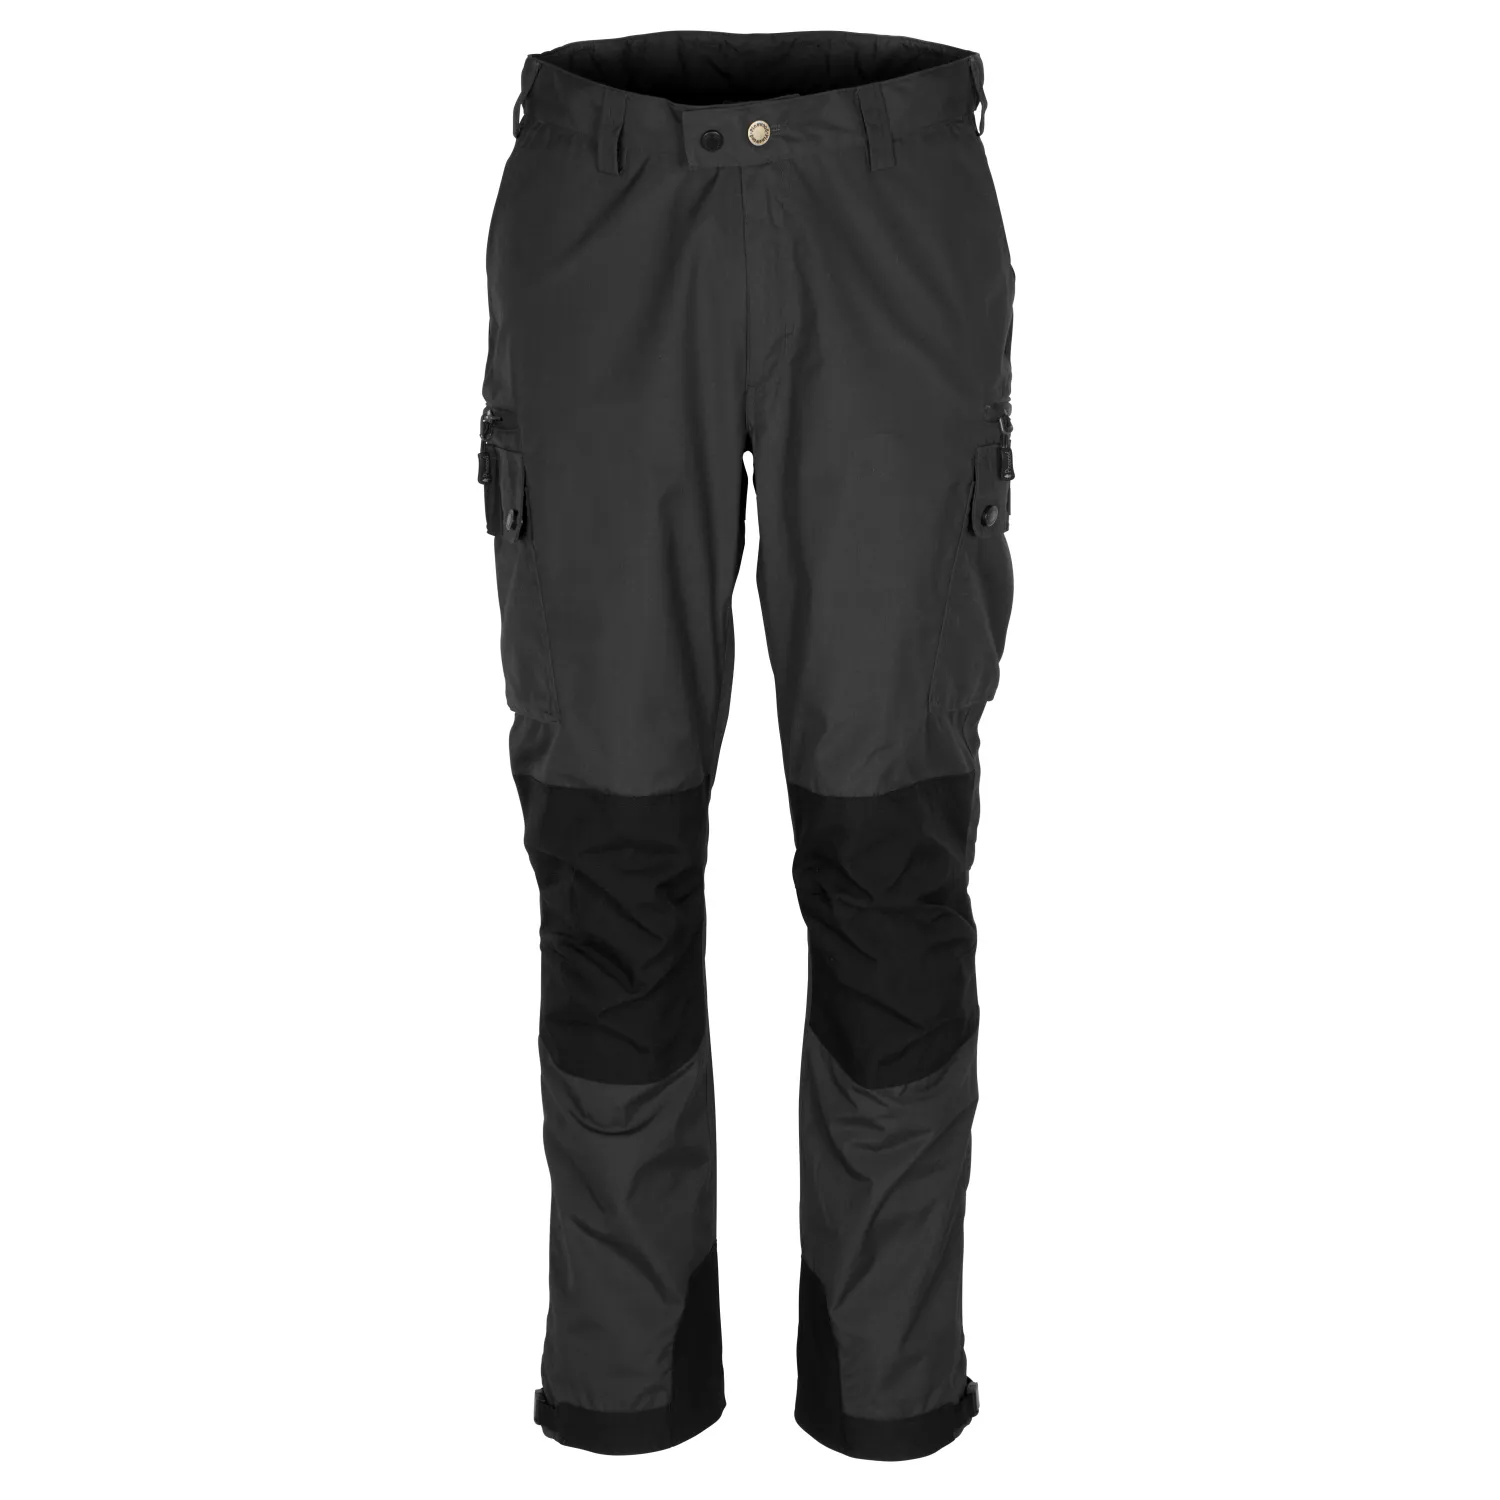 01_5392-446-01_Pinewood-Lappland-Extreme-20-Trousers-Mens_Dark-Anthracite-Black (3112).jpg